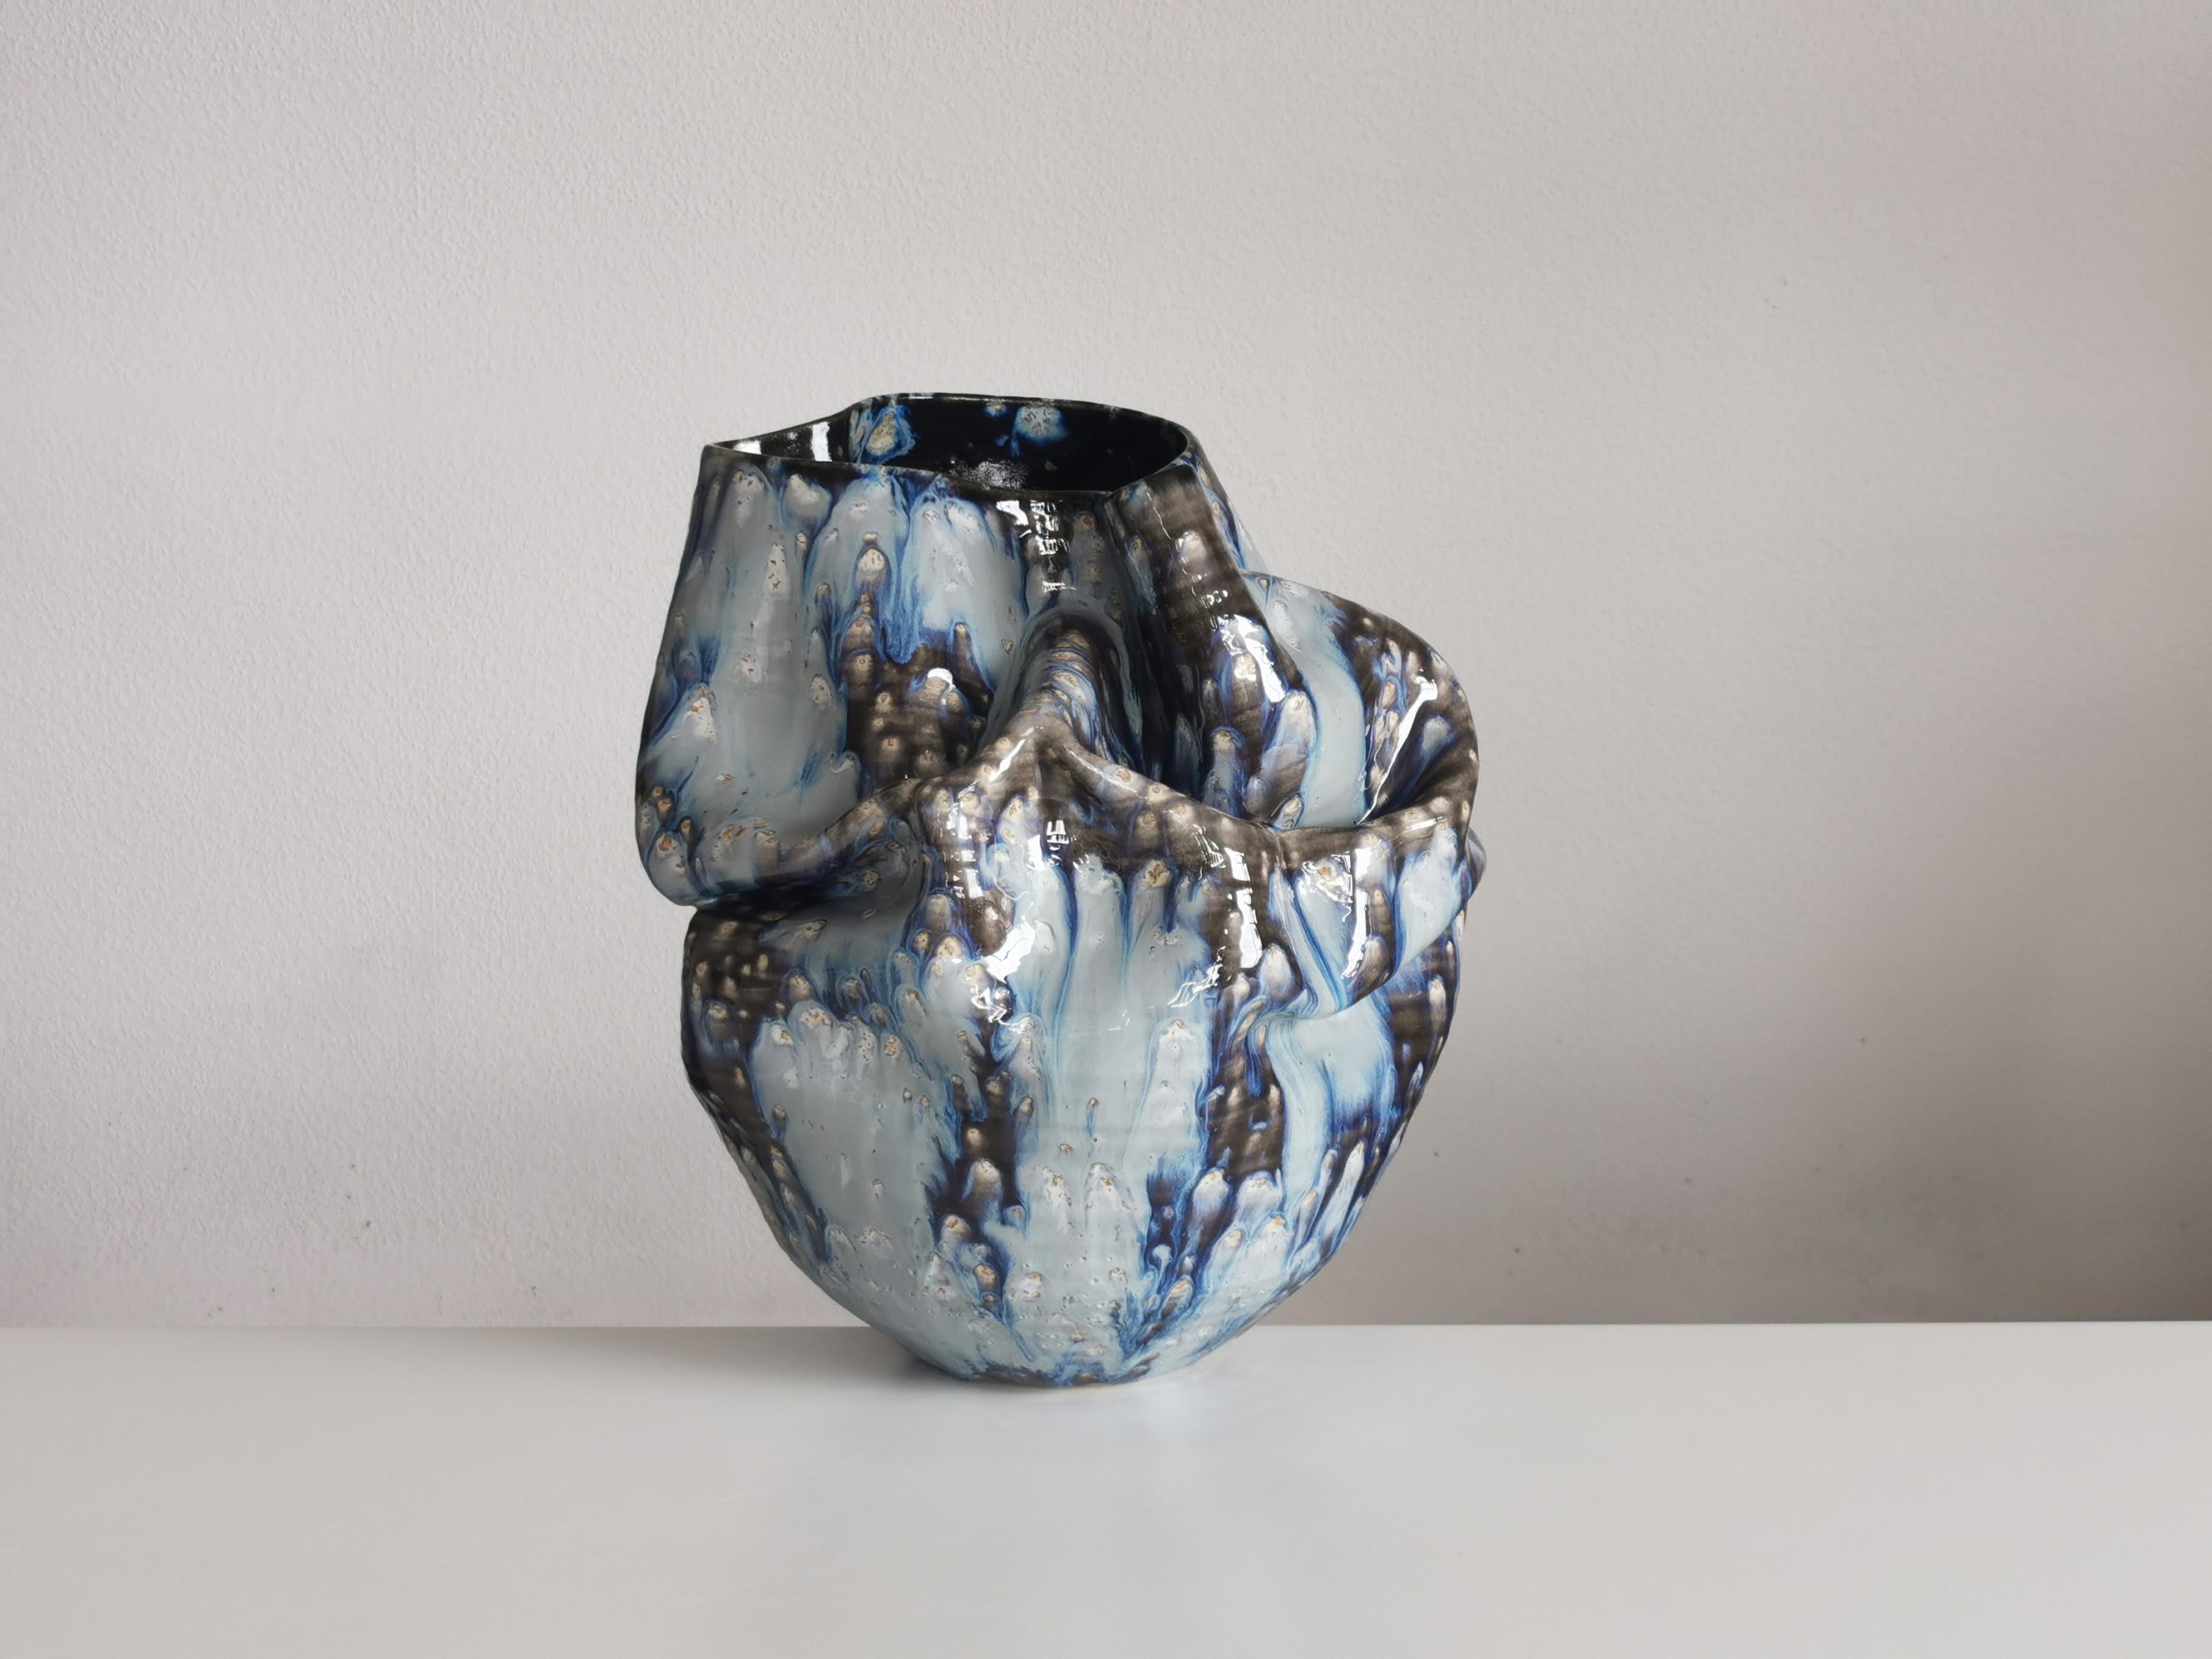 Medium Undulating Form Galaxy Blue Glaze, Unique Ceramic Sculpture Vessel N.78 1